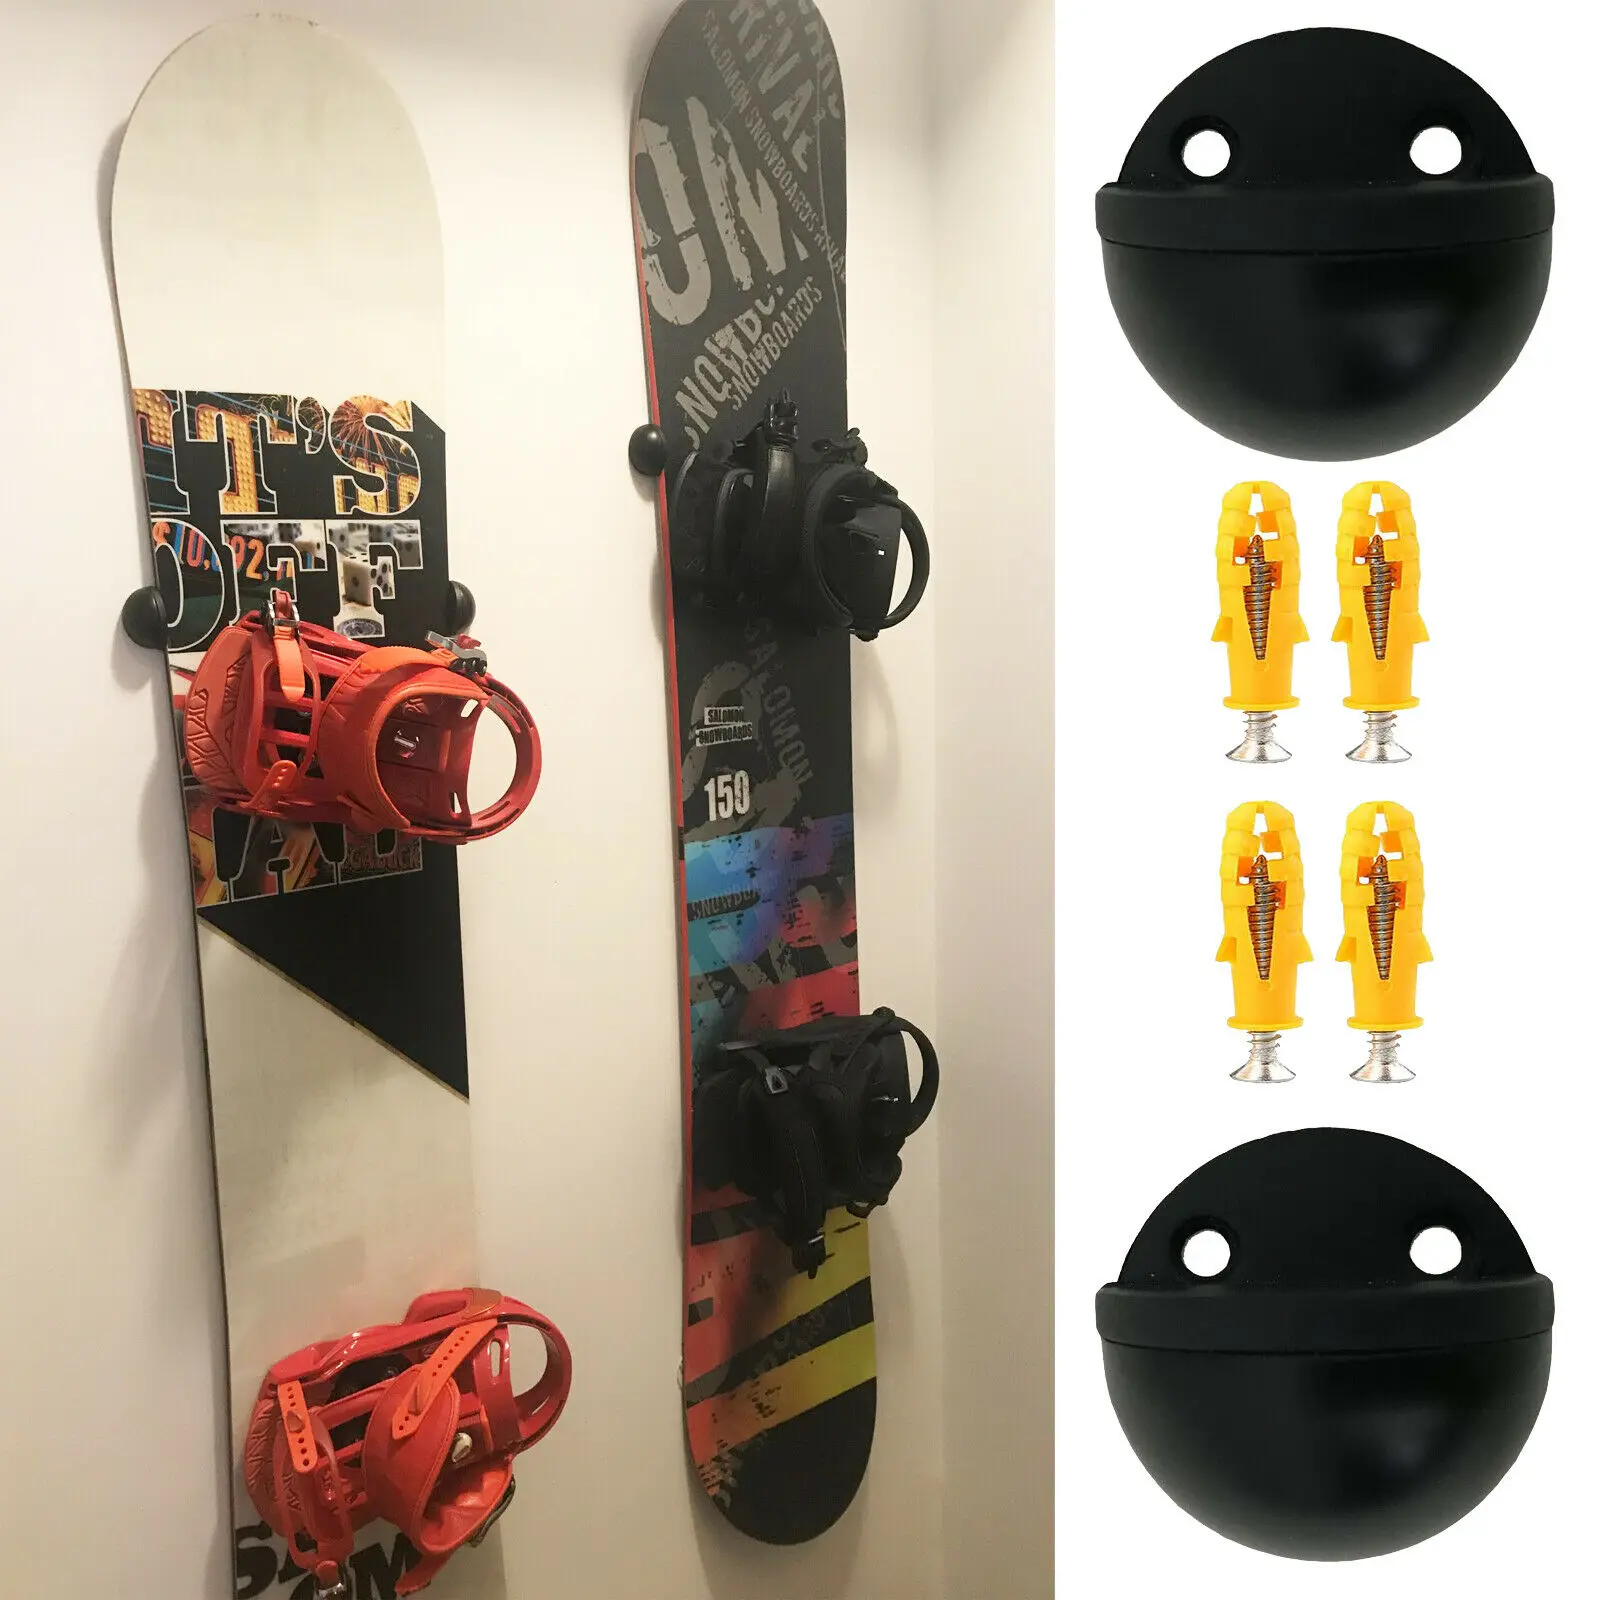 Snowboard Skateboard Wall Mount Hanger Storage Display Holder Wall Mount Rack 